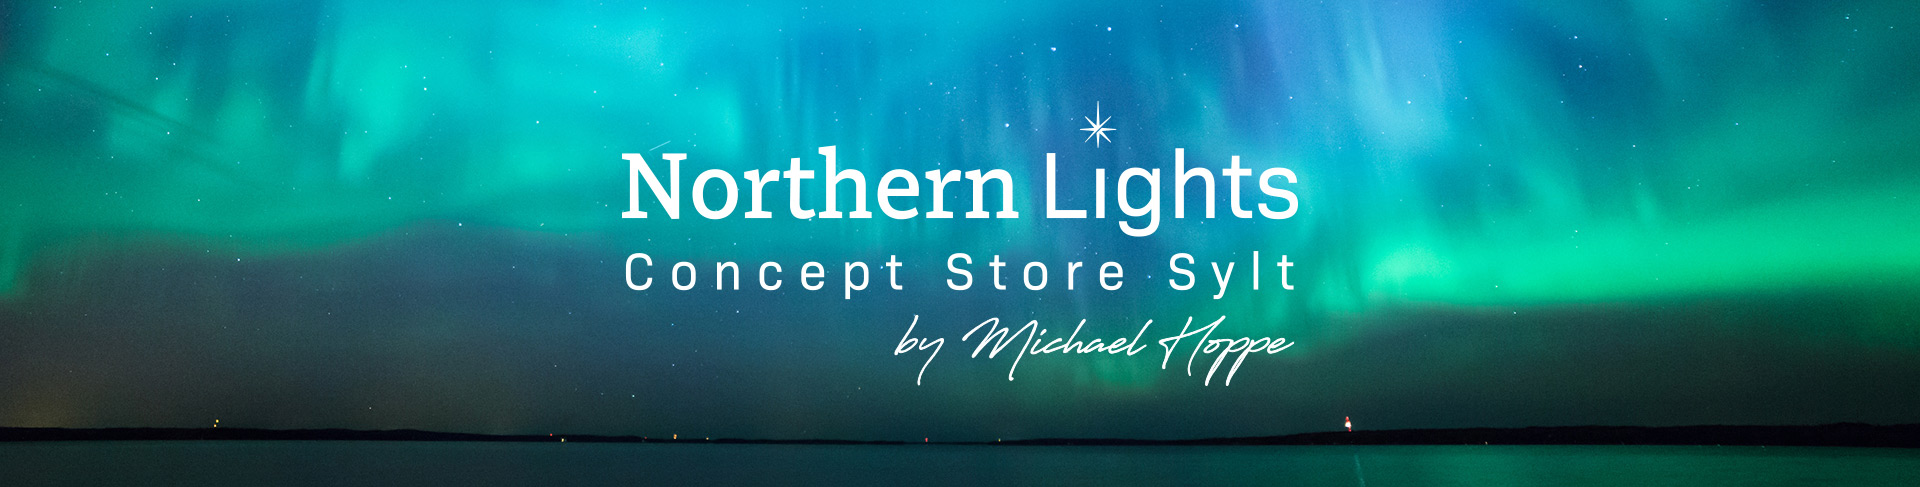 Northernlights Sylt Banner Aurora Borealis